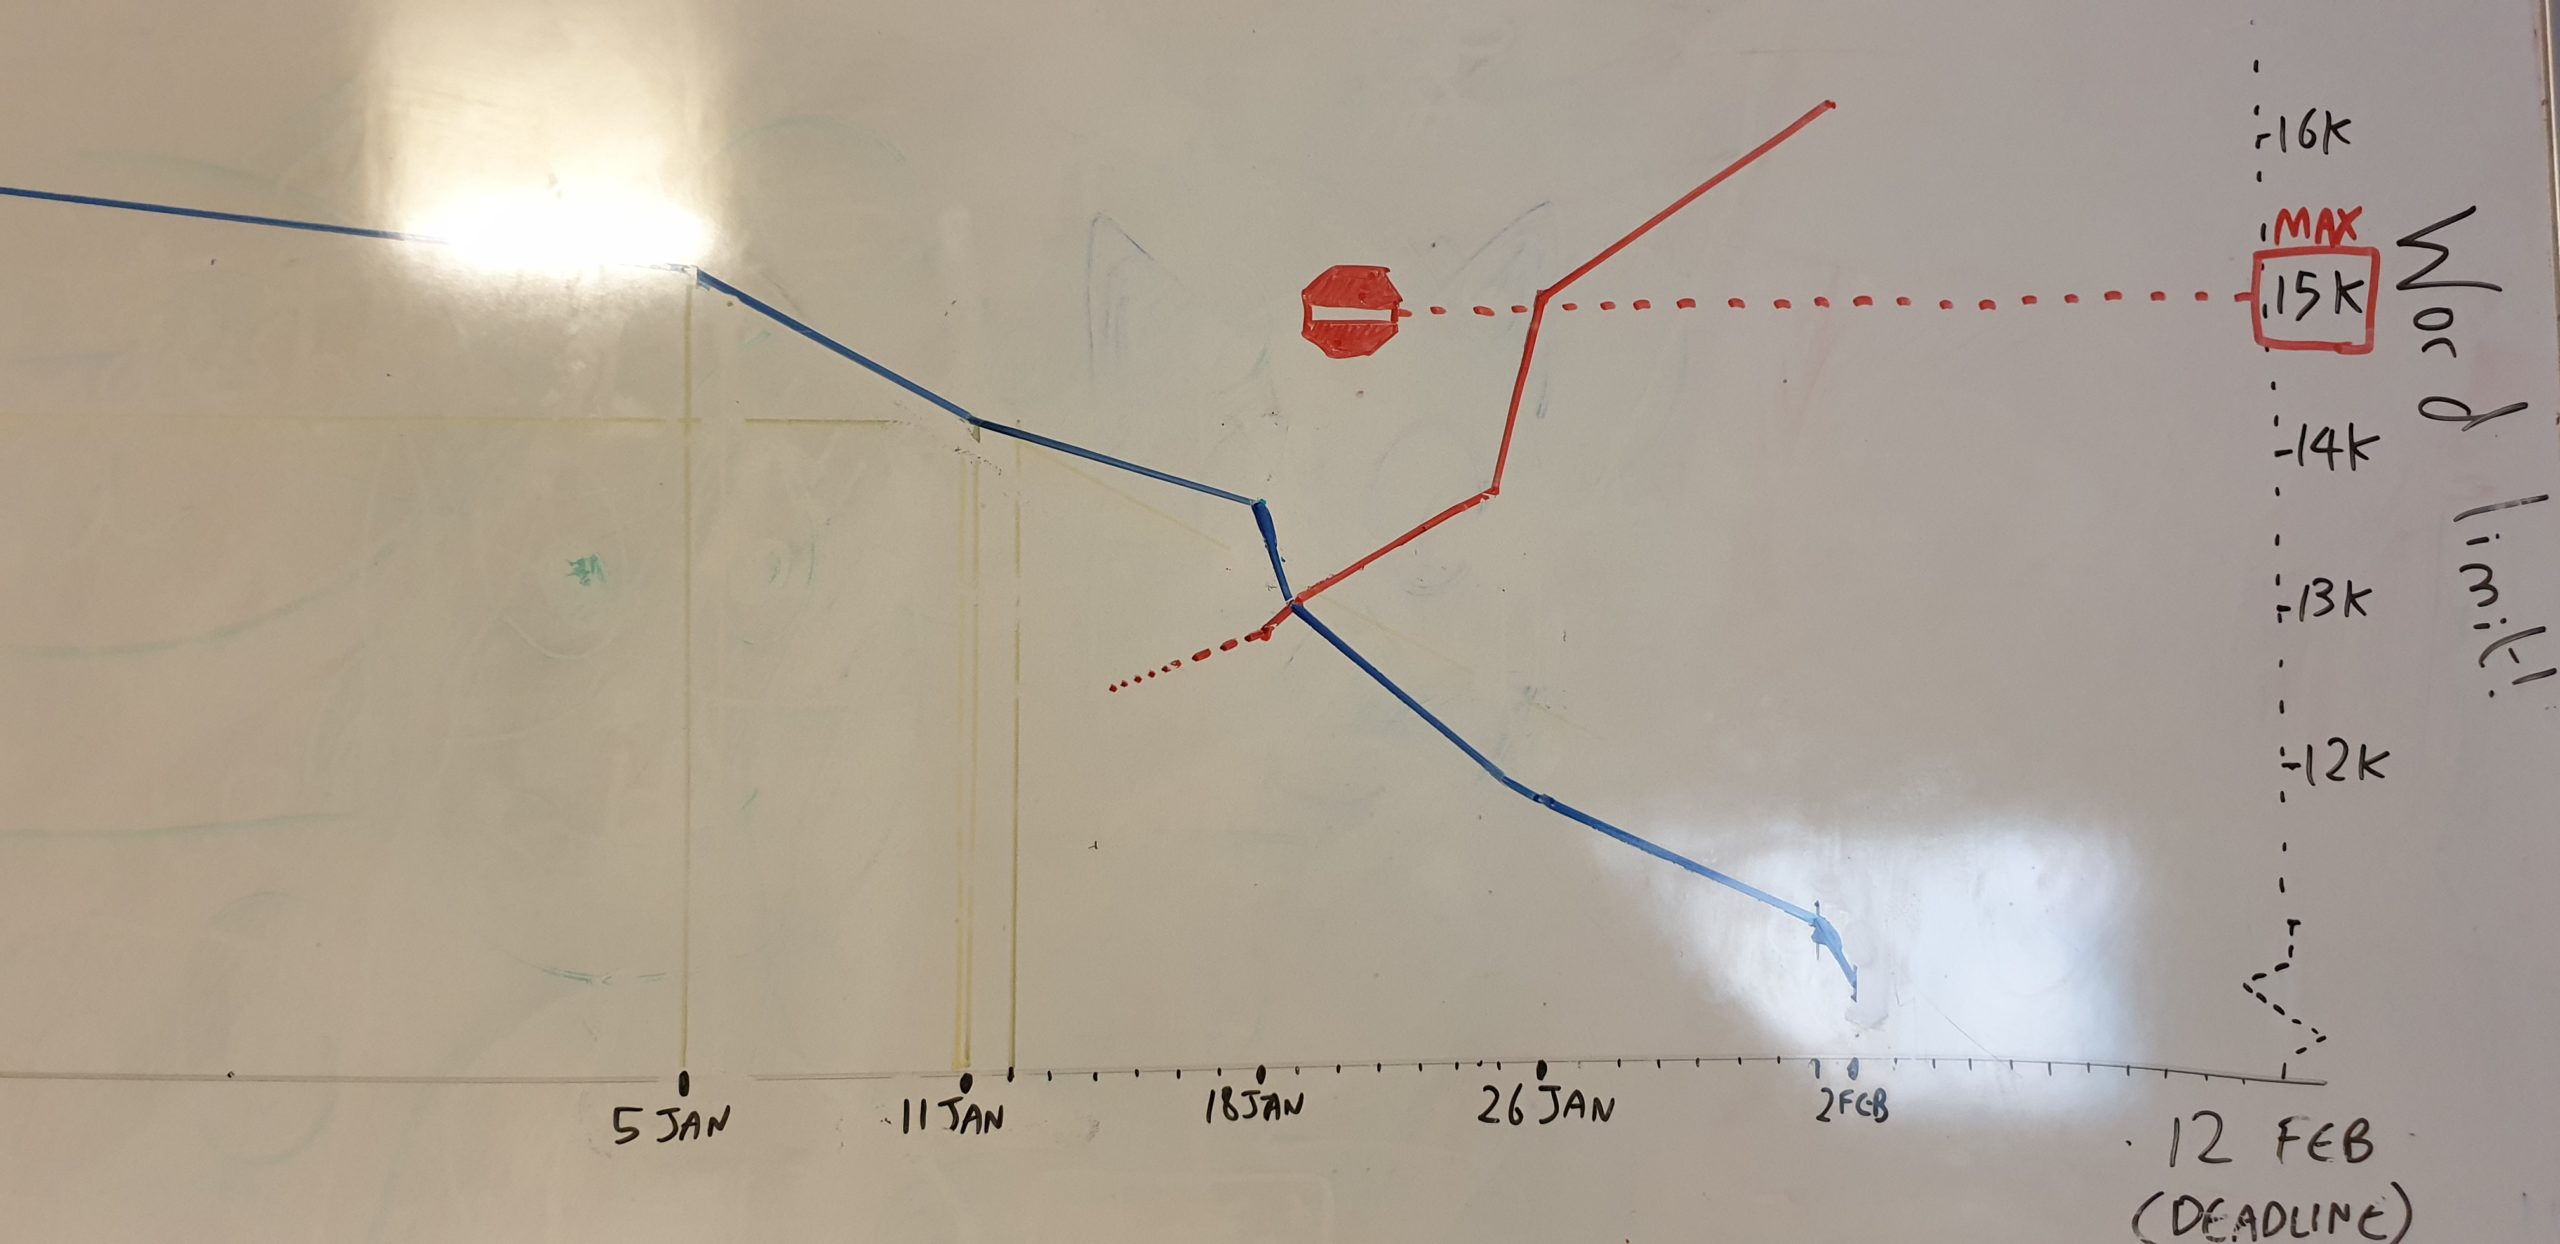 Graph of Dan's dissertation progress as the deadline creeps closer